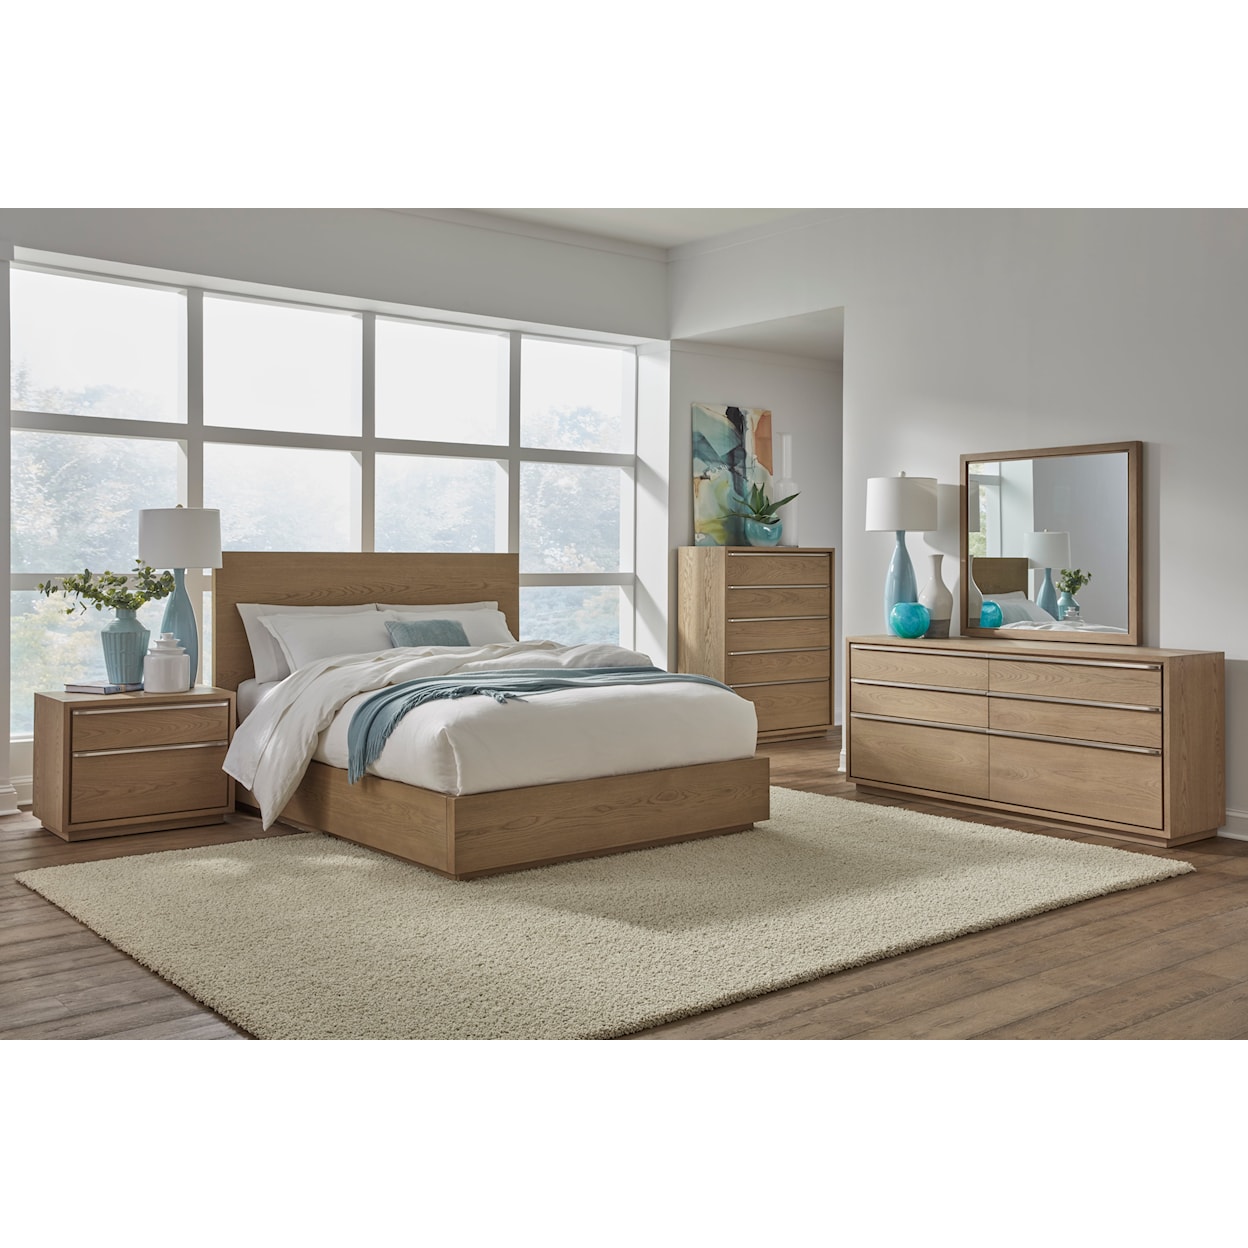 Modus International One 5 Piece King Bedroom Set with Dresser